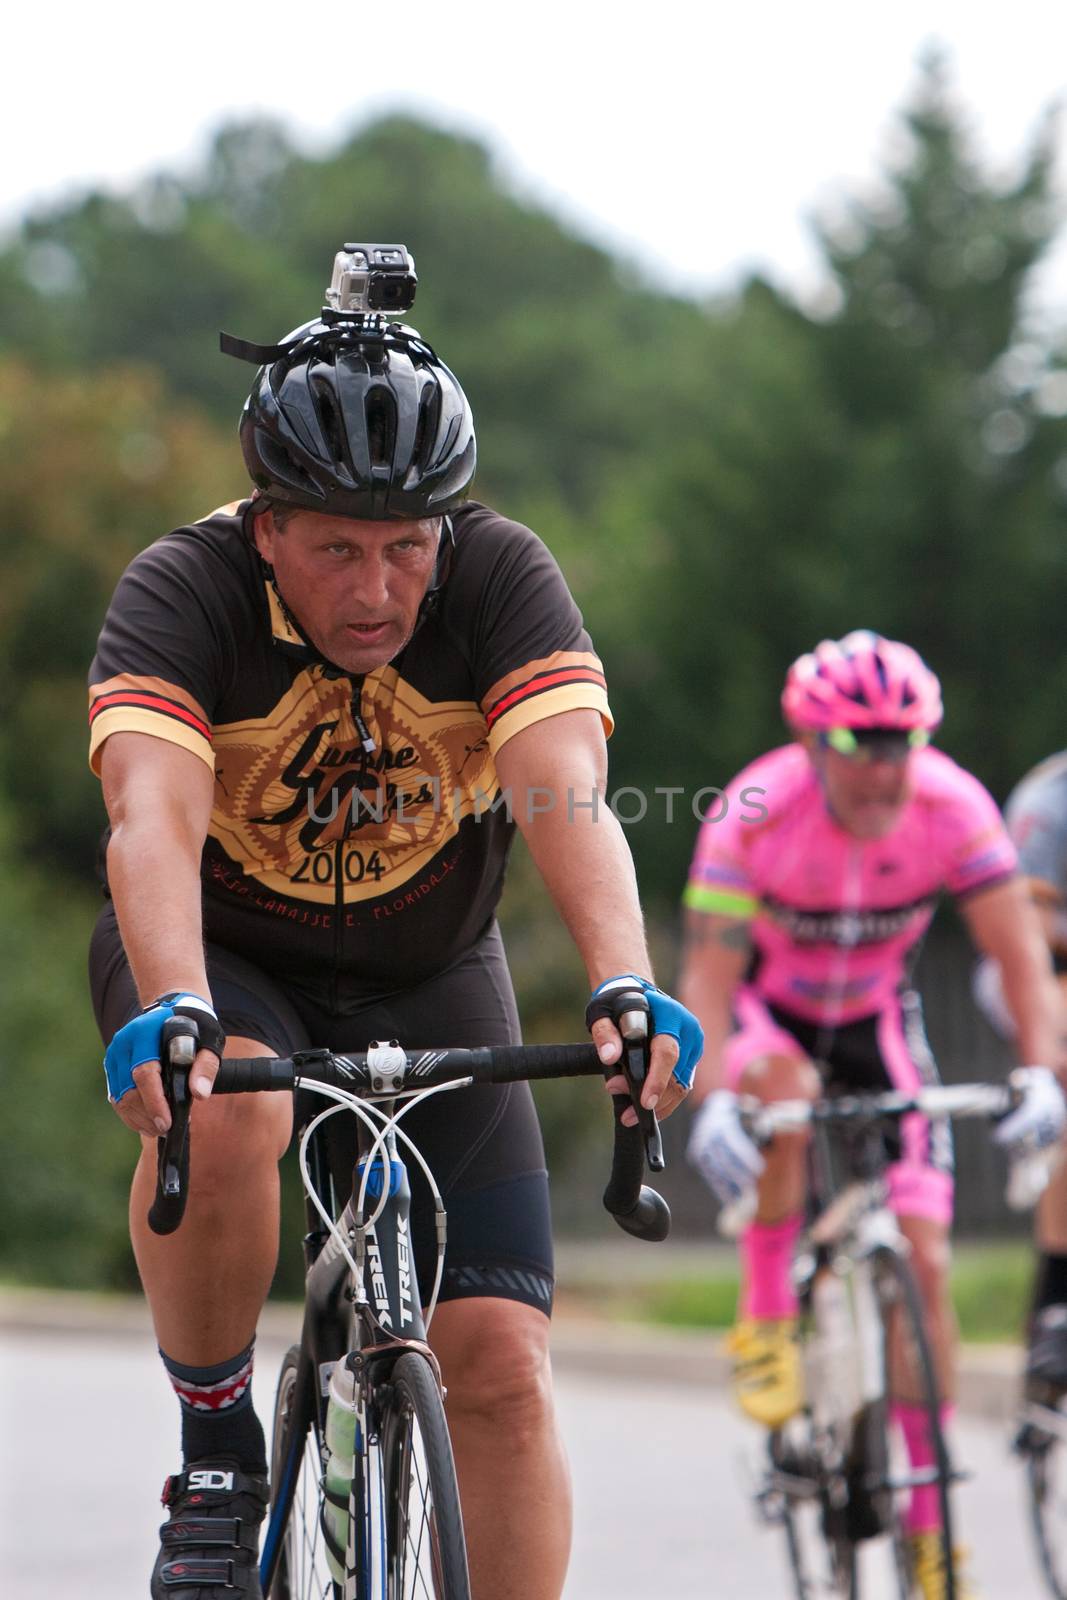 Cyclist Competitor Races Wearing Go Pro Helmet Cam by BluIz60